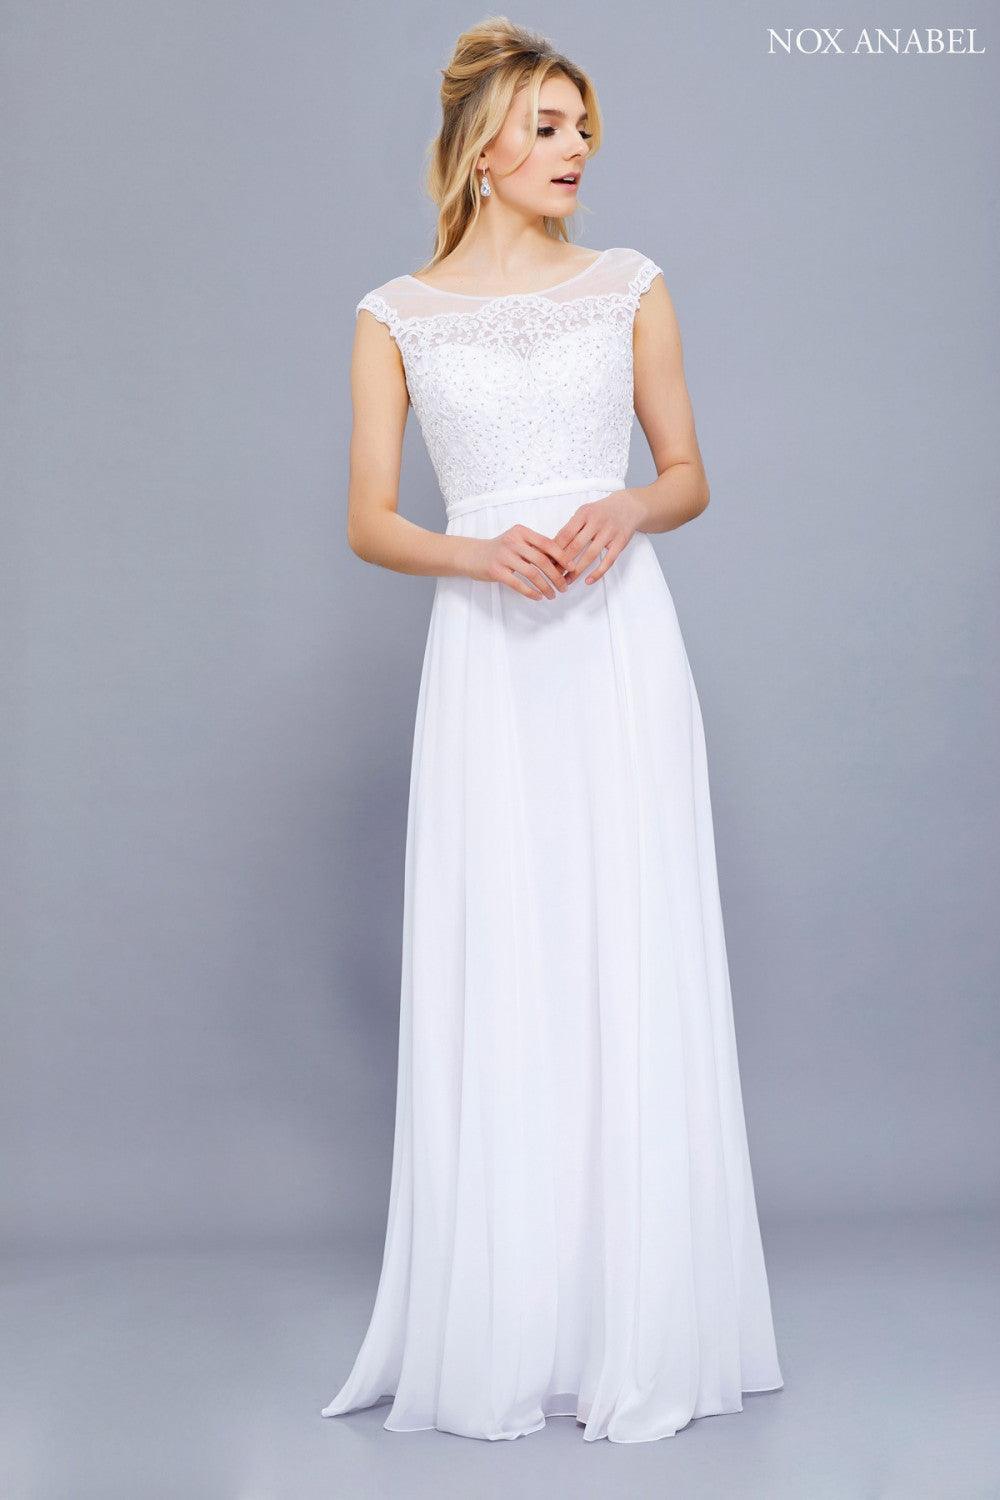 Long Formal Bridal Wedding Dress - The Dress Outlet Nox Anabel